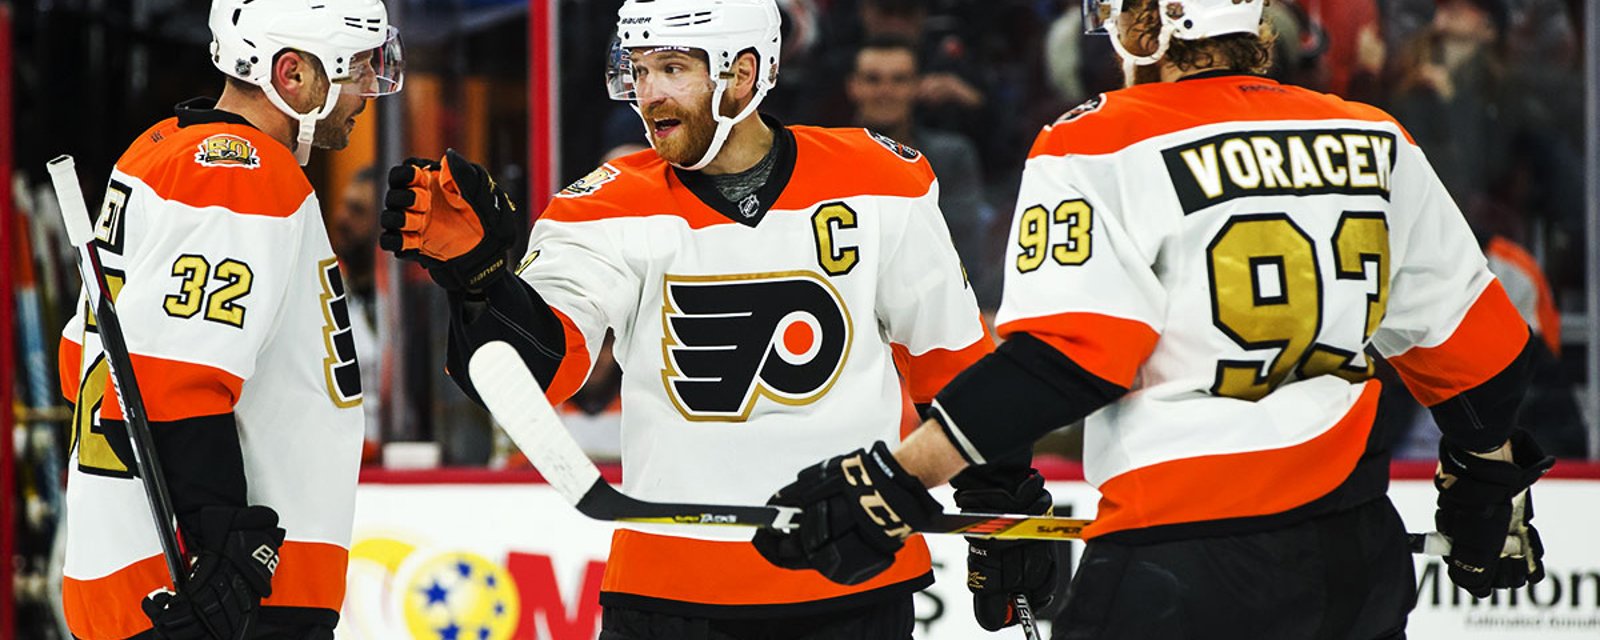 The Philadelphia Flyers “forced” to make a move?